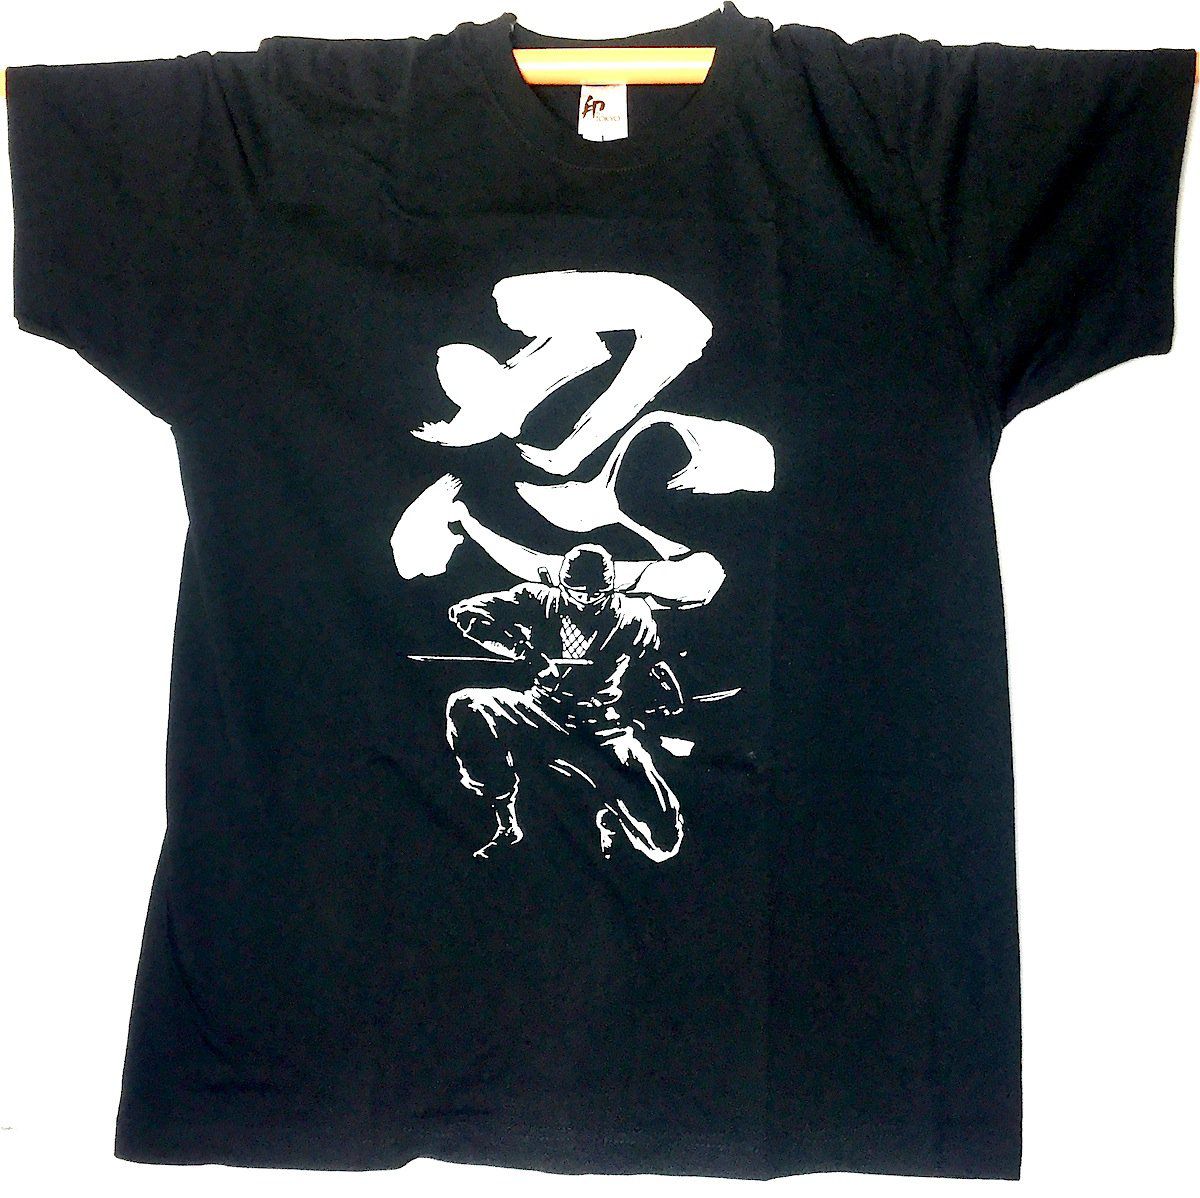 Tee-shirt japonais Ninja